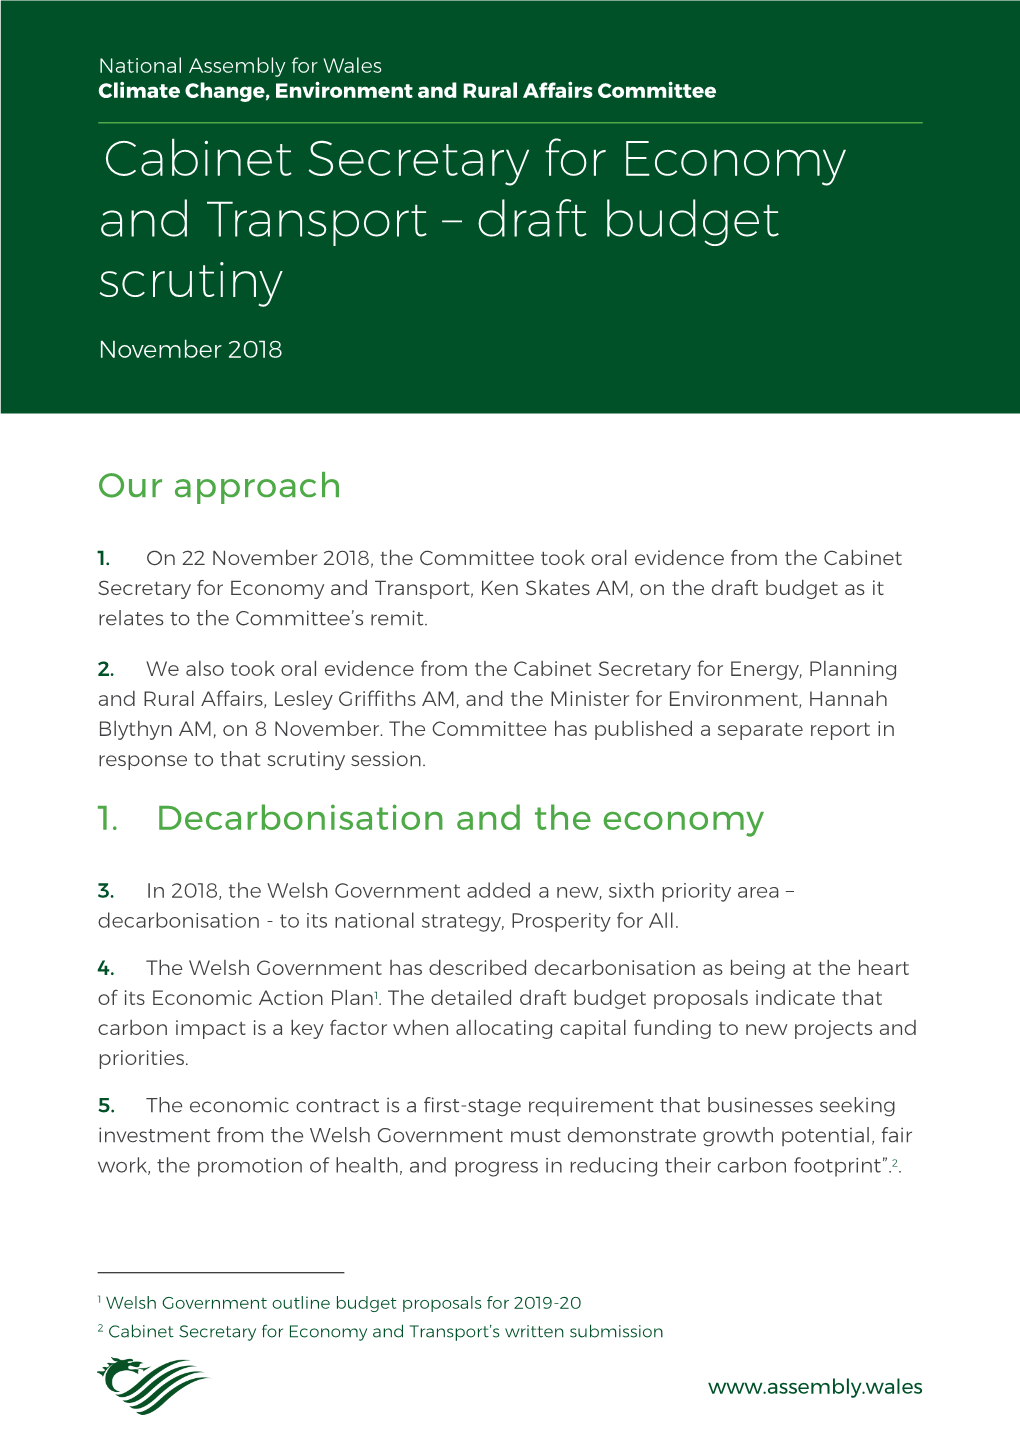 Cabinet Secretary for Economy and Transport – Draft Budget Scrutiny